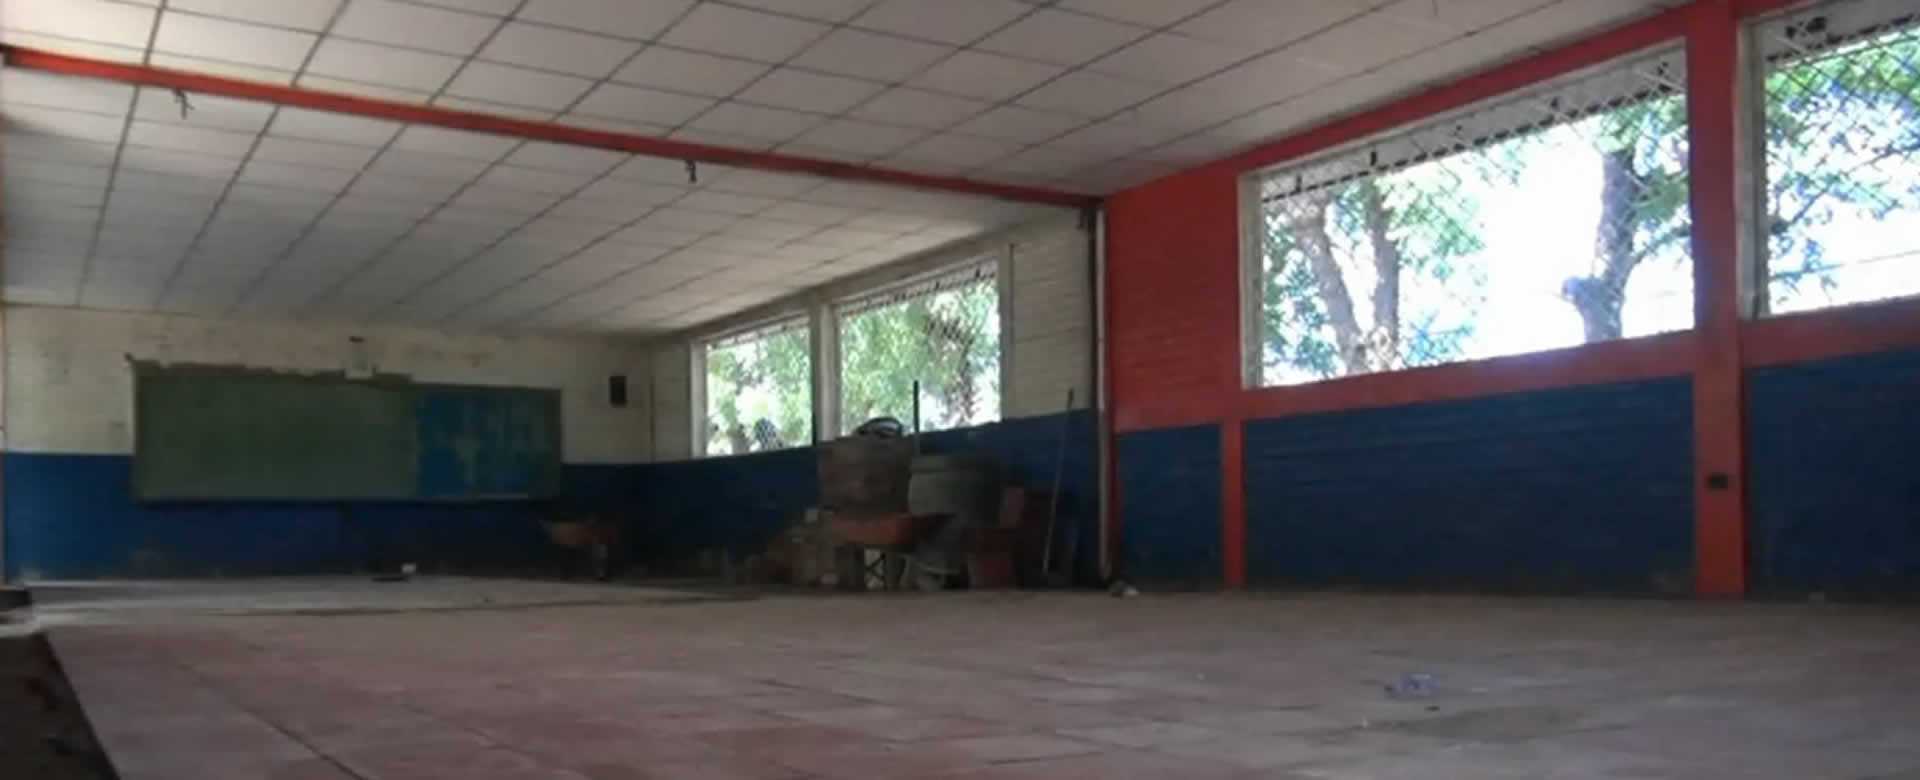 MINED rehabilita un centro educativo en San Rafael del Sur